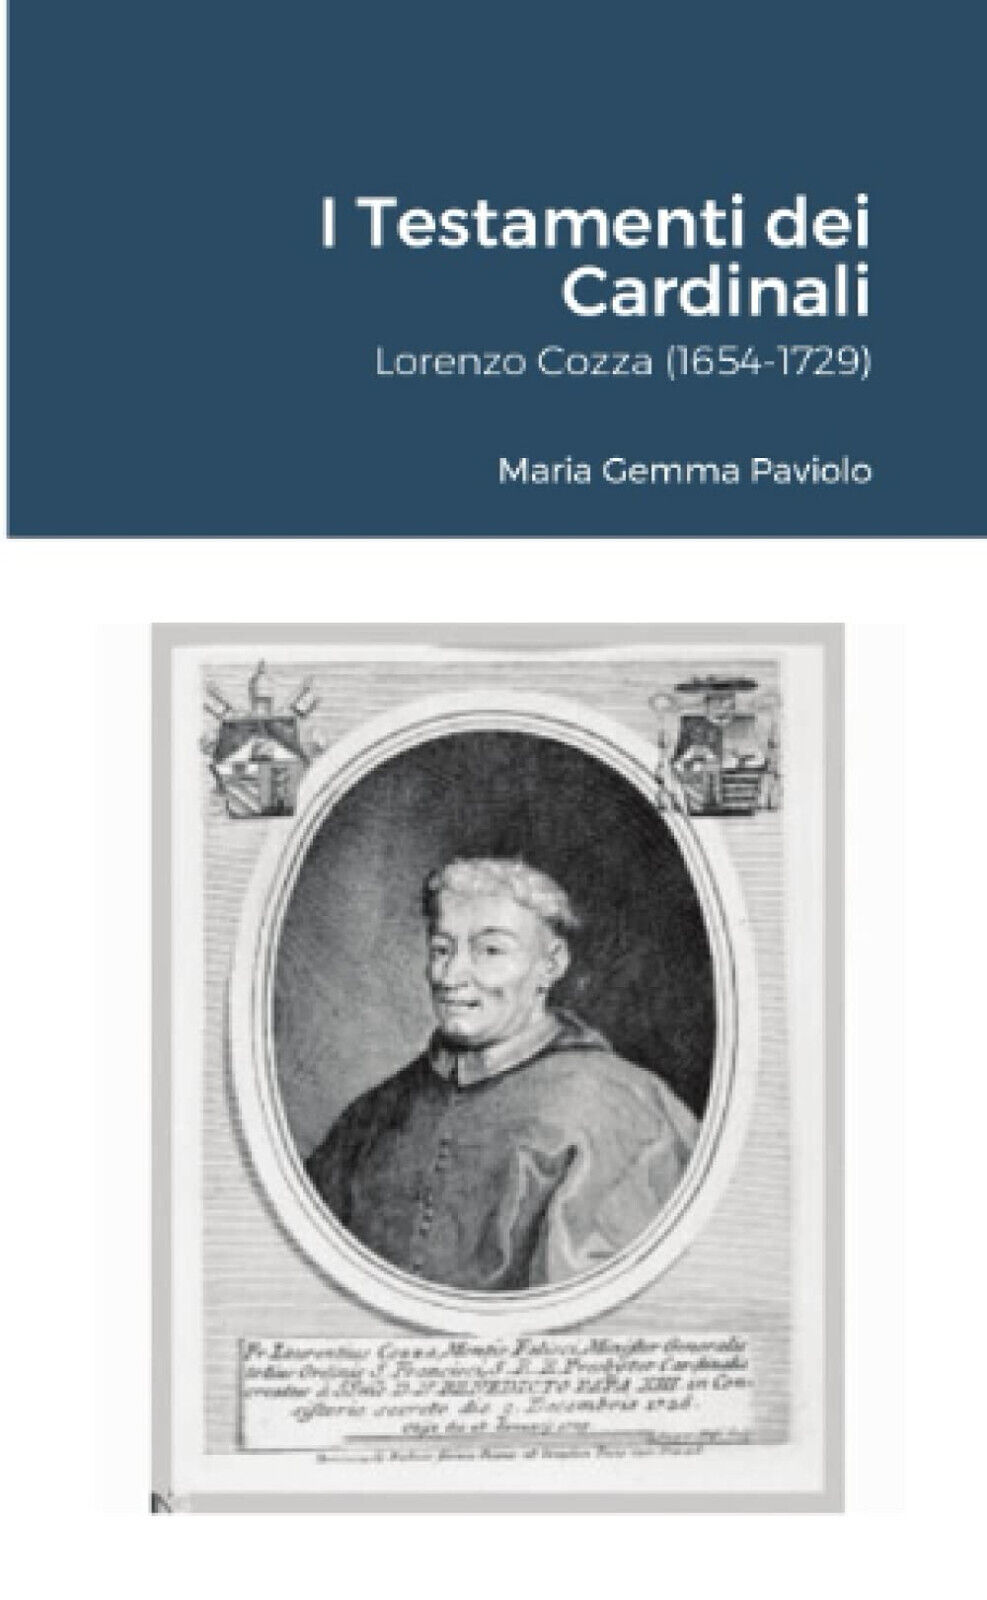 I Testamenti dei Cardinali: Lorenzo Cozza (1654-1729) - Lulu.com, 2021